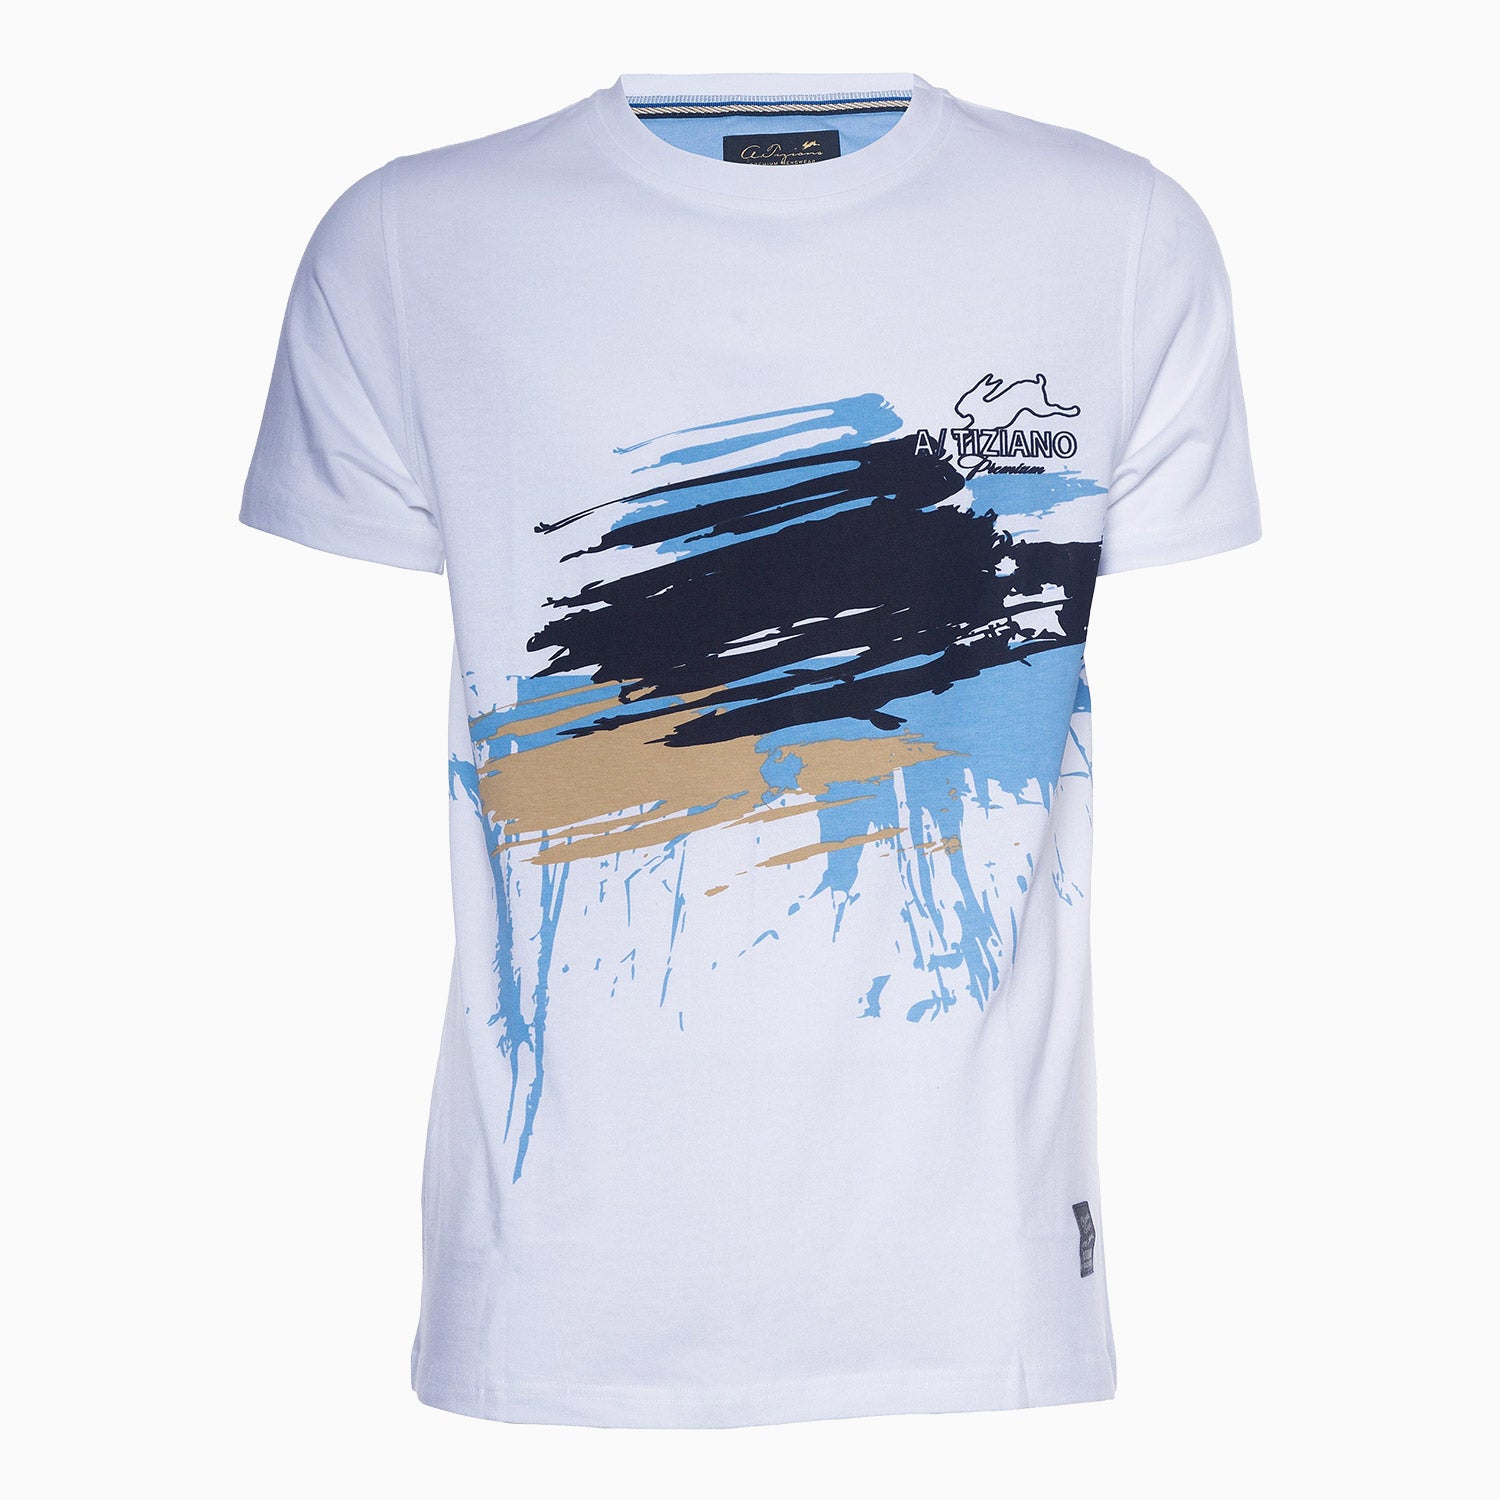 a-tiziano-mens-westin-graphic-print-short-sleeve-t-shirt-41atm4305-wht